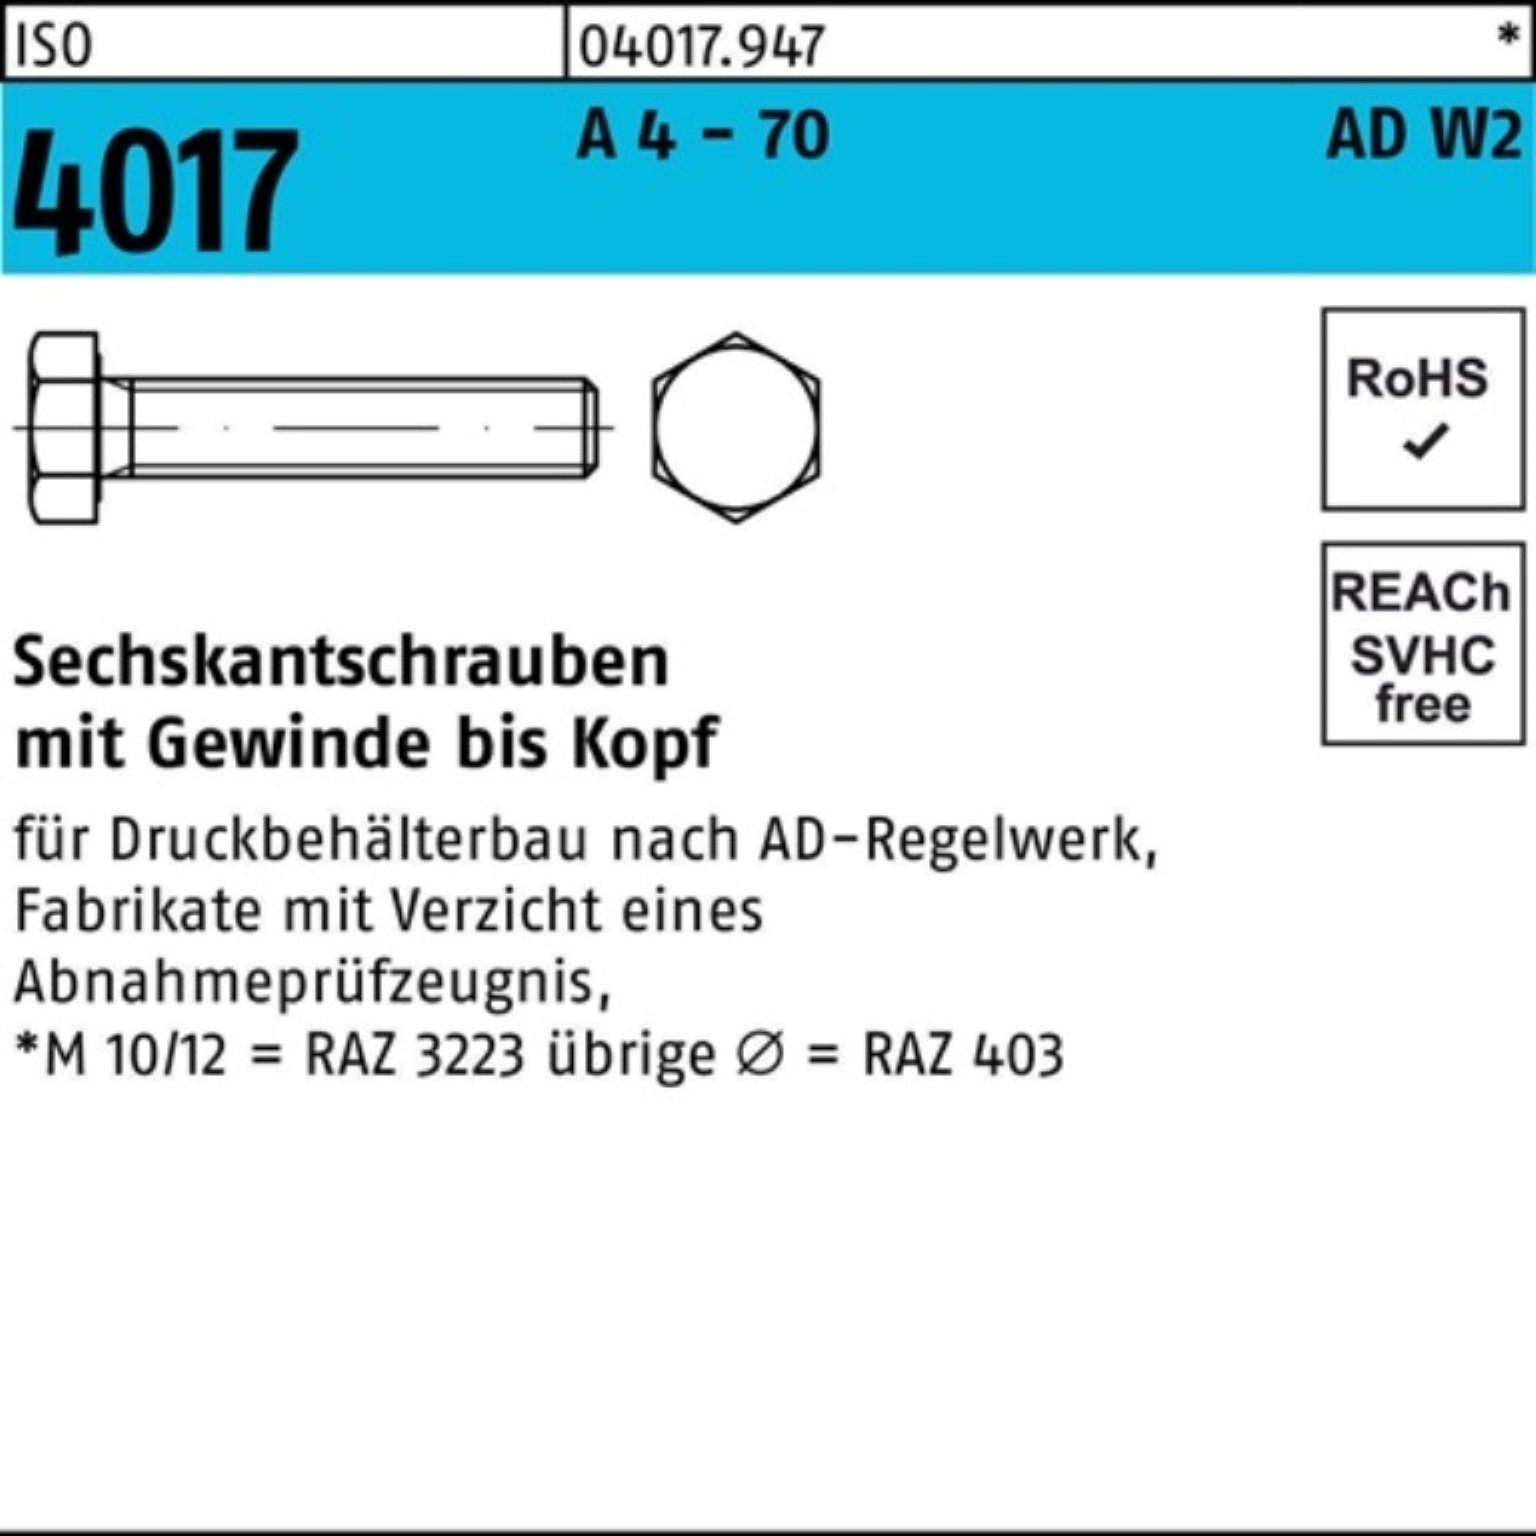 Bufab Sechskantschraube 100er Pack Sechskantschraube ISO 4017 VG M10x 55 A 4 - 70 AD-W2 50 St